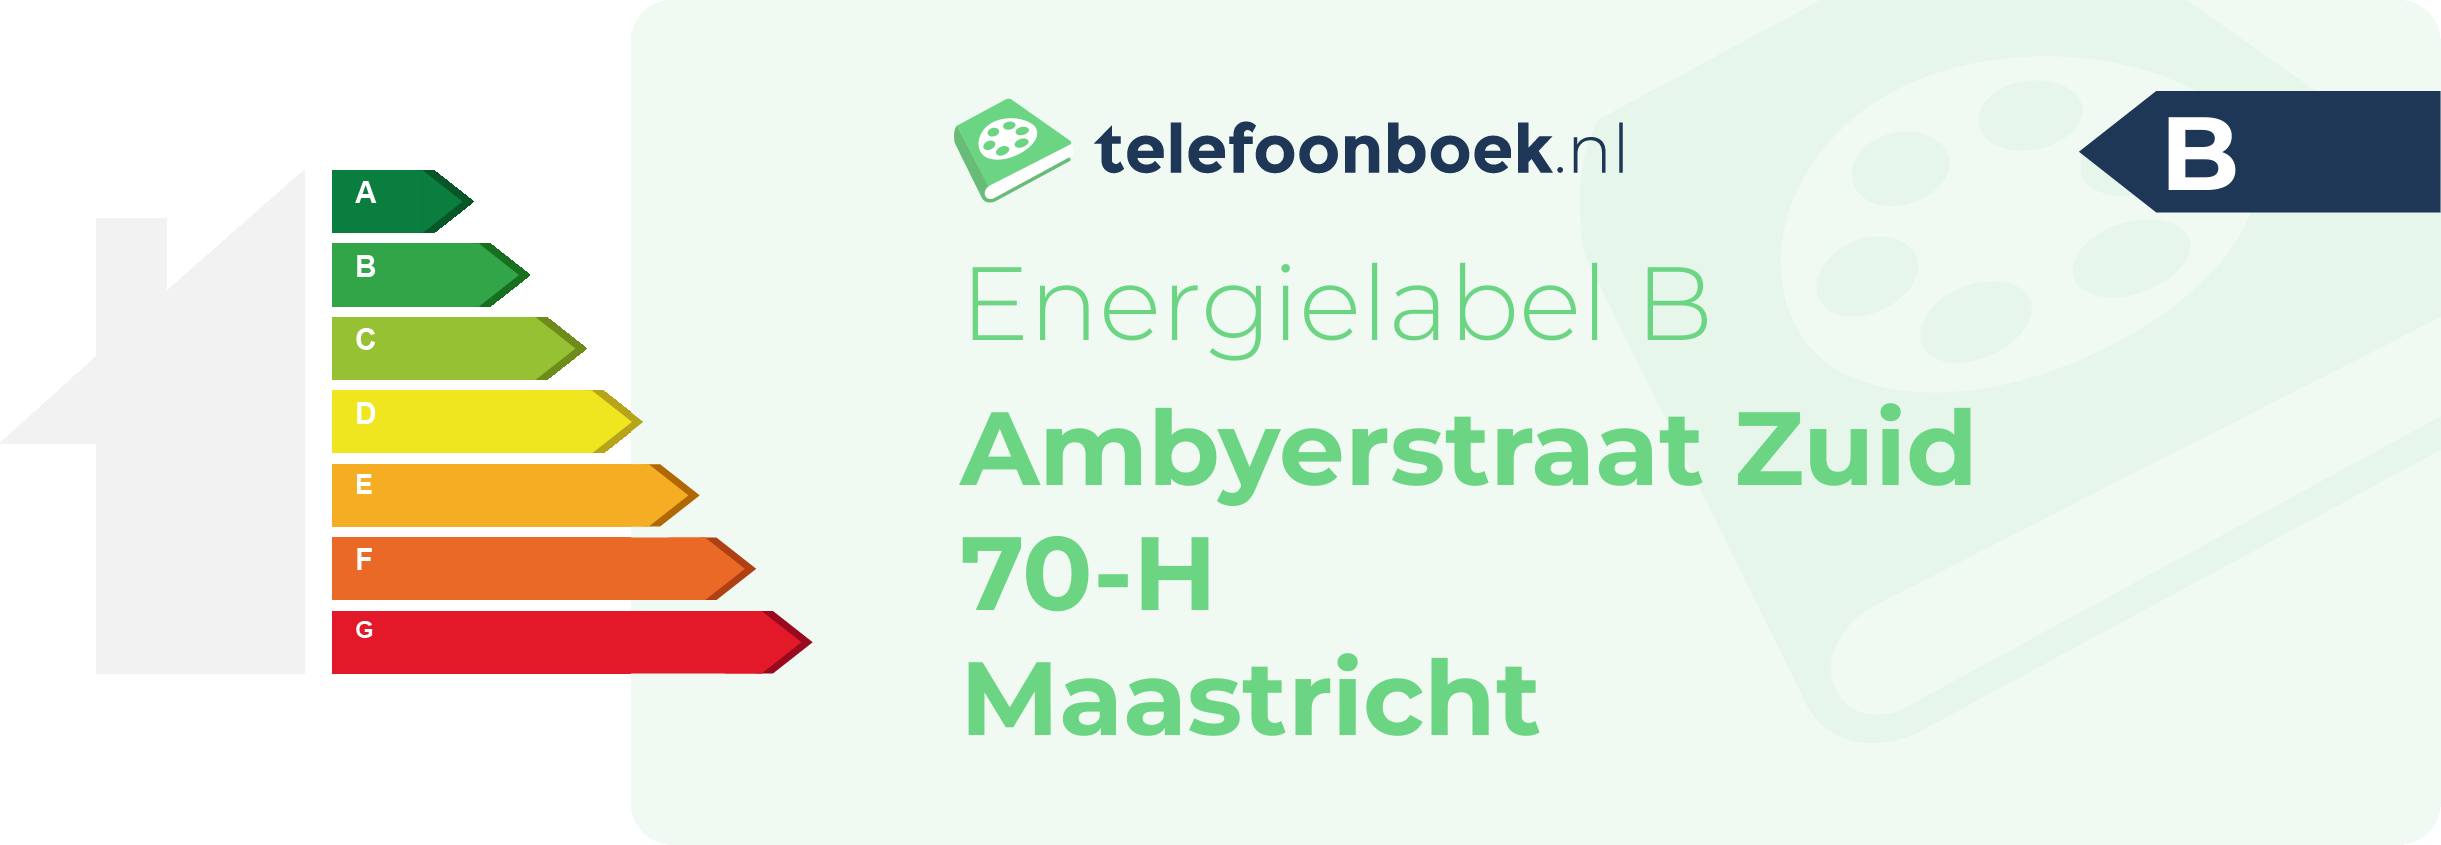 Energielabel Ambyerstraat Zuid 70-H Maastricht